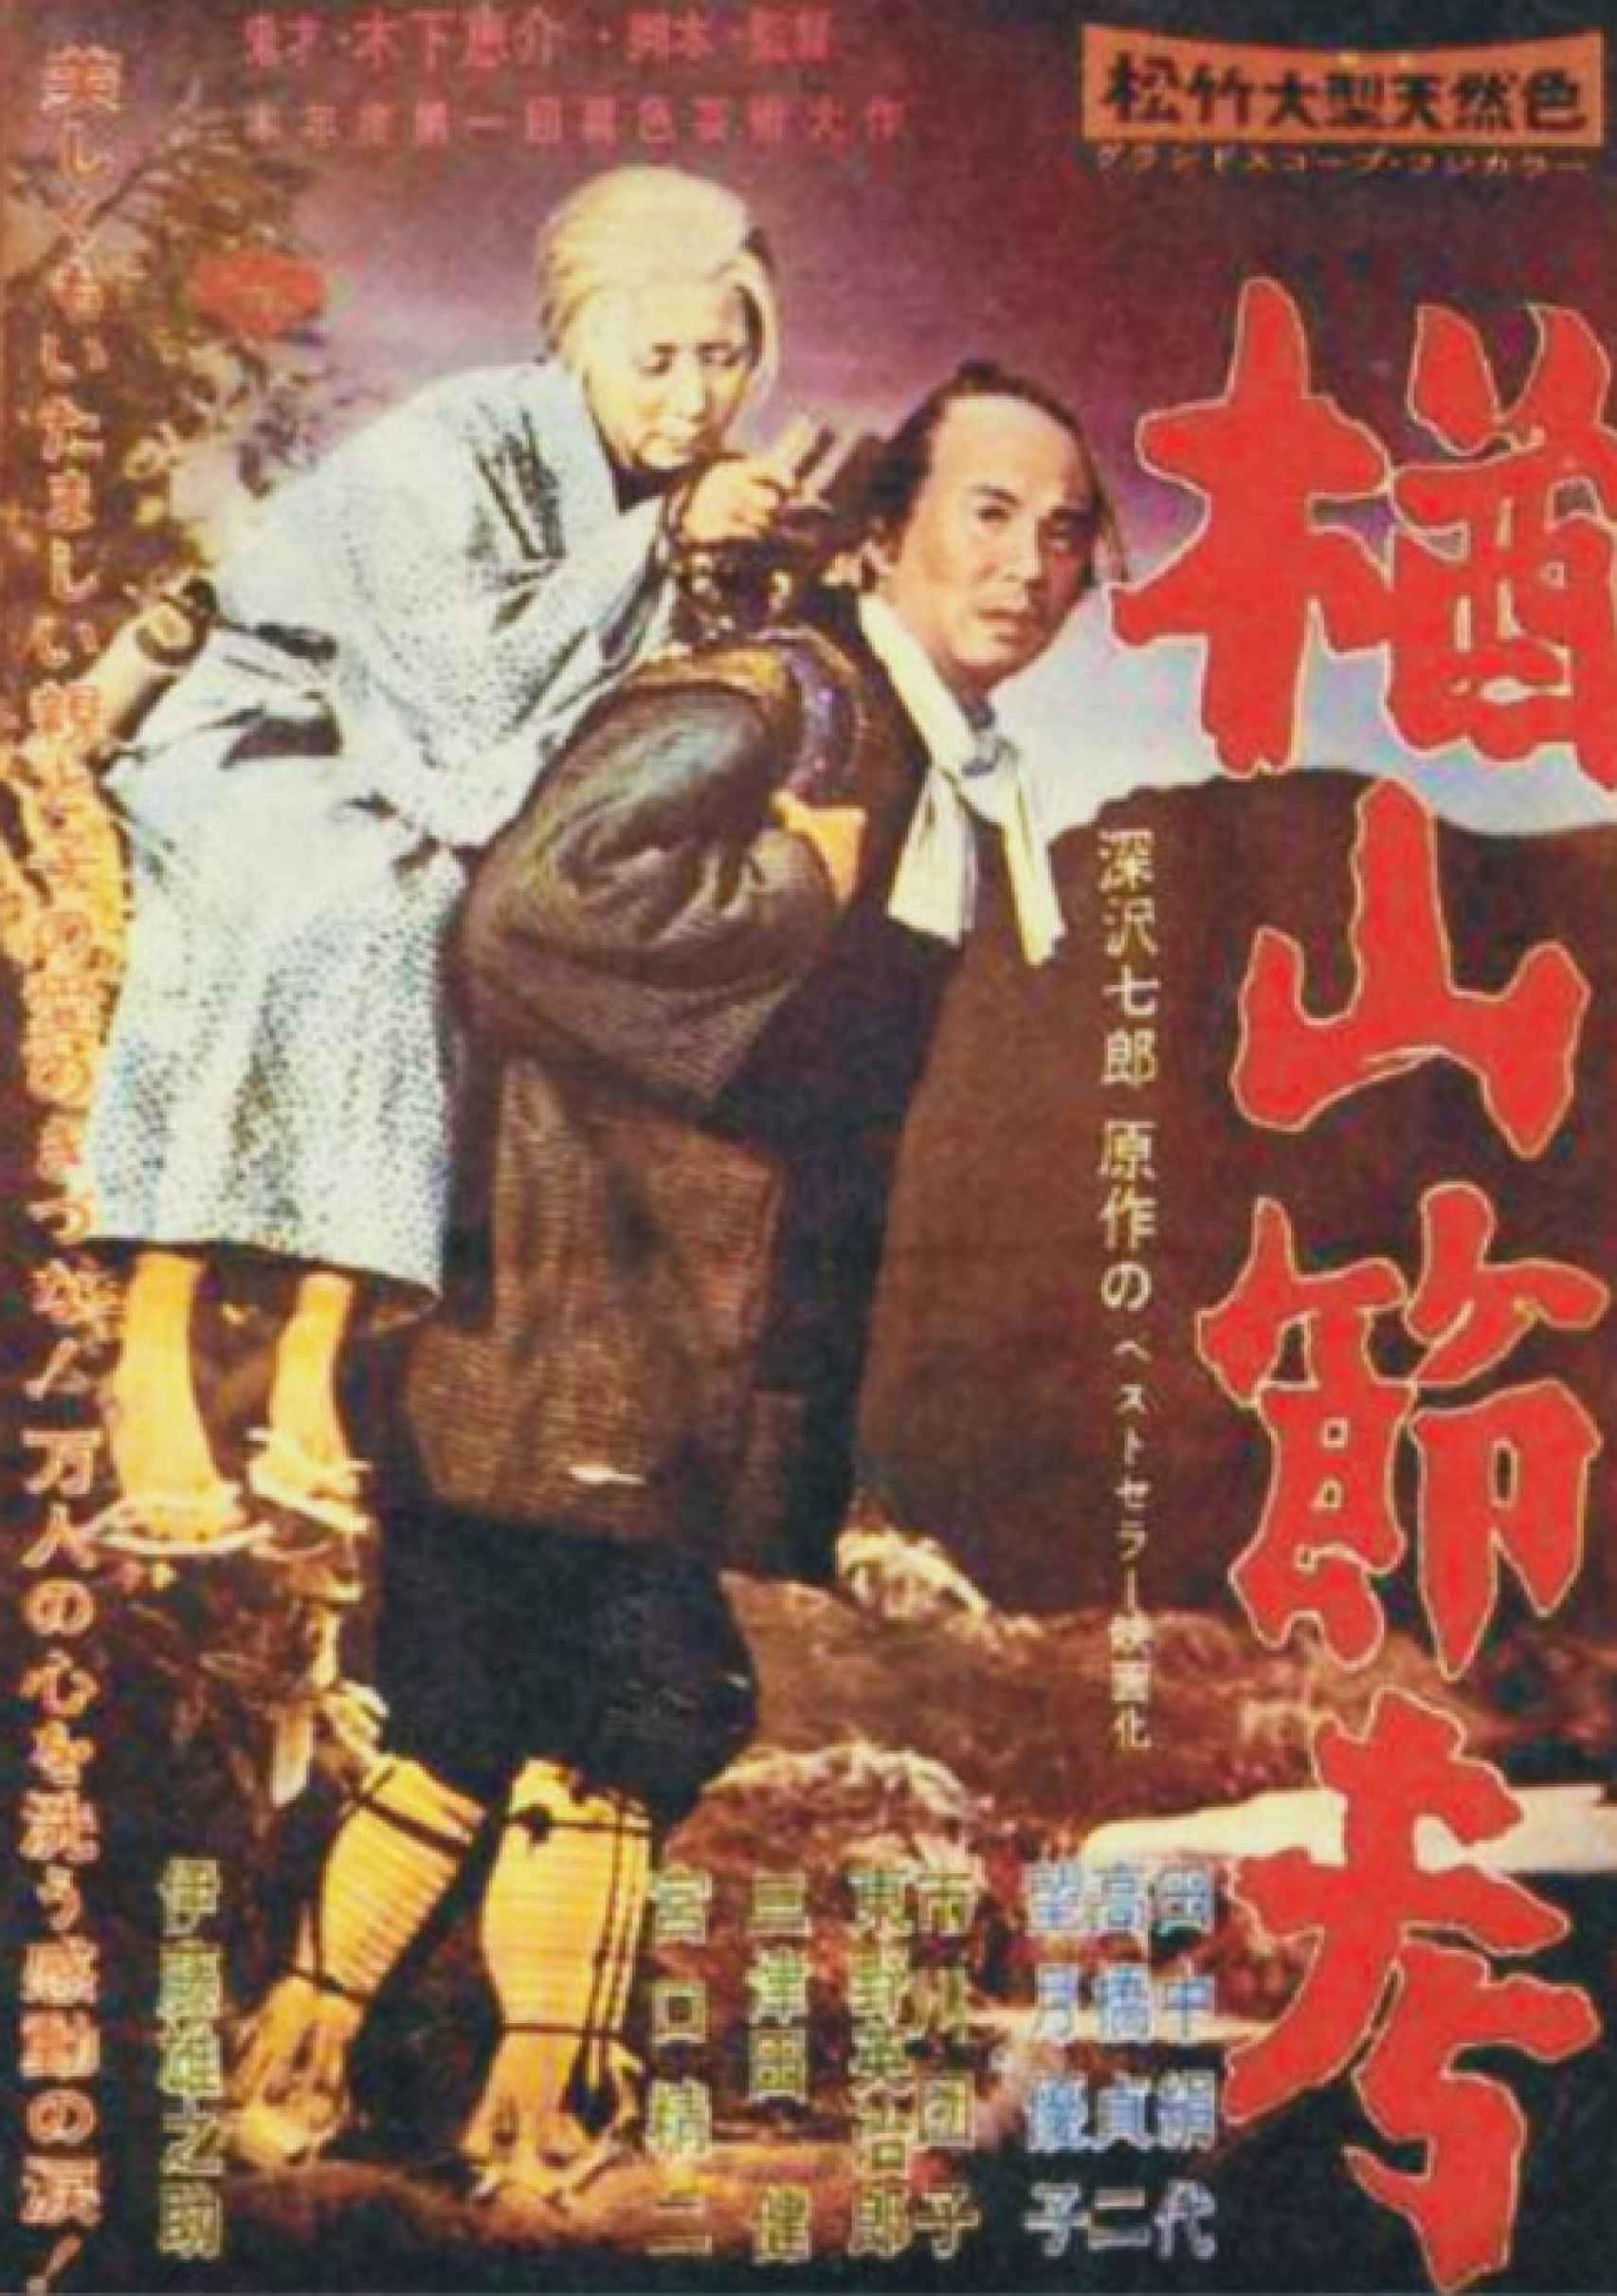 Cartel de 'La balada de Narayama' (1958), dirigida por Keisuke Kinoshita